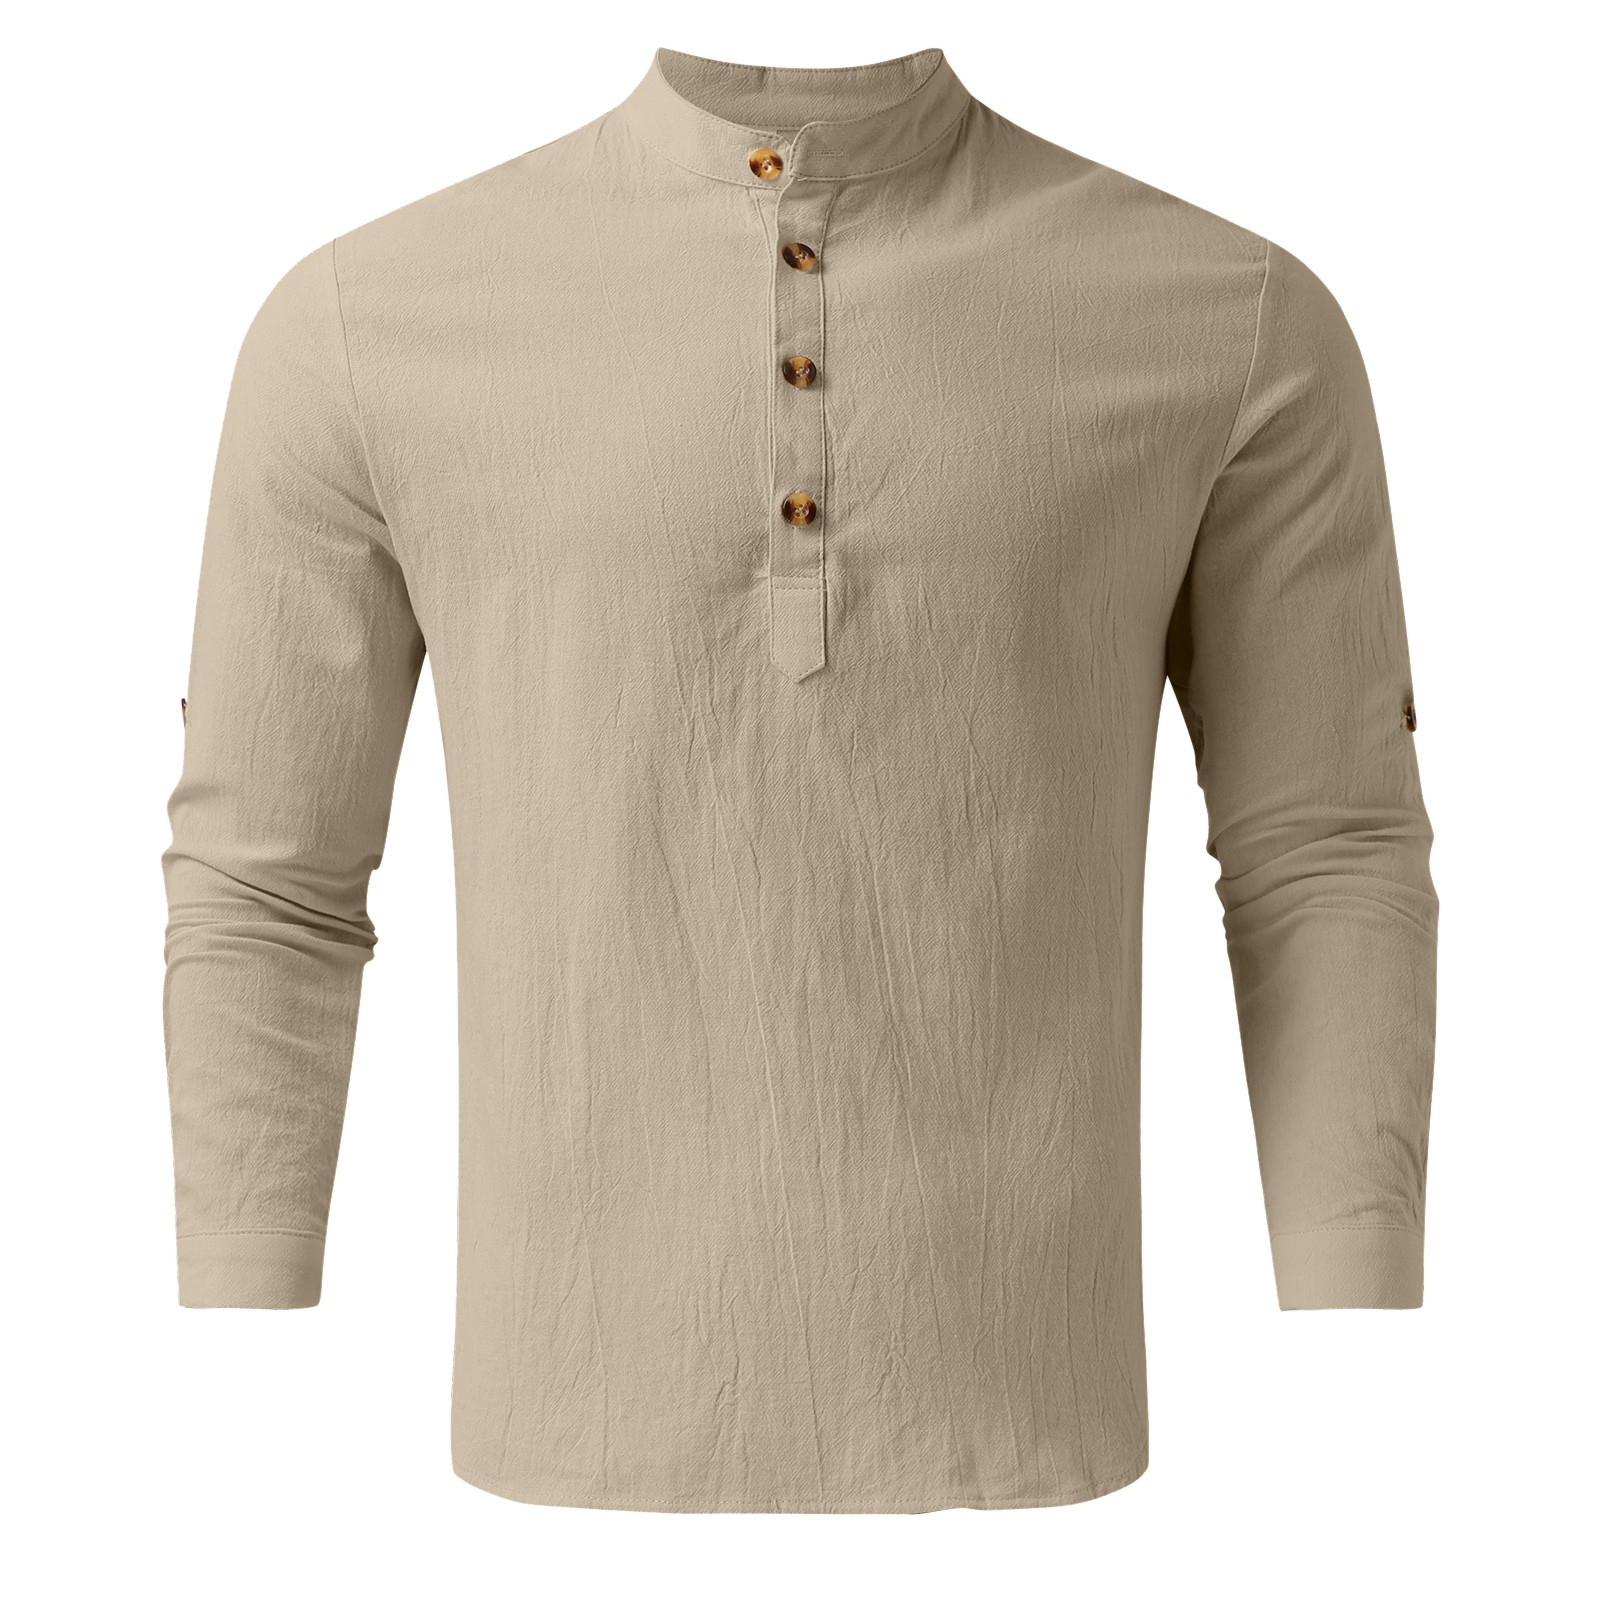 Men's long sleeve button down shirts